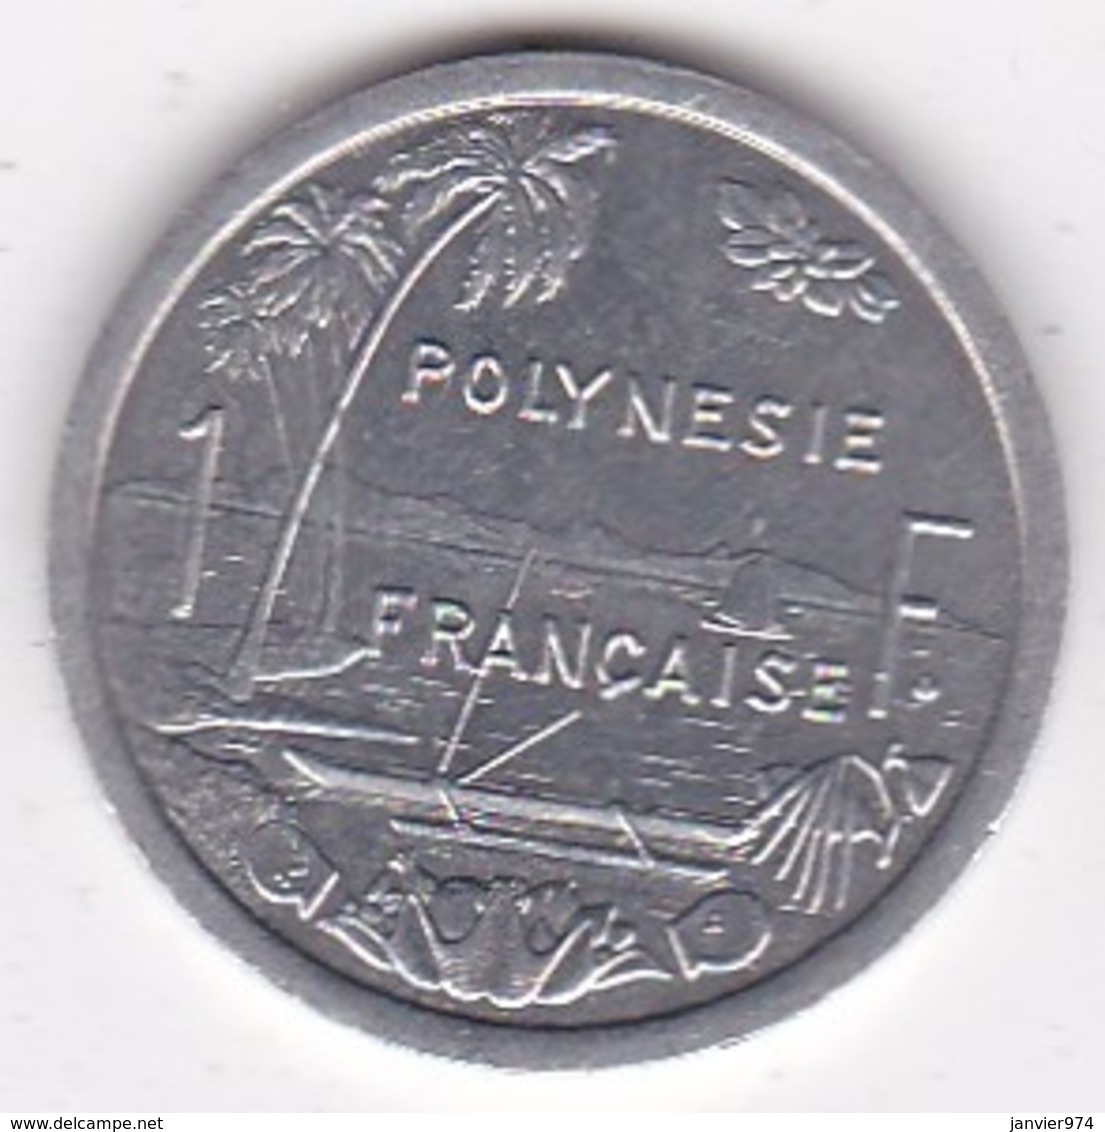 Polynésie Francaise . 1 Franc 1998, En Aluminium - French Polynesia